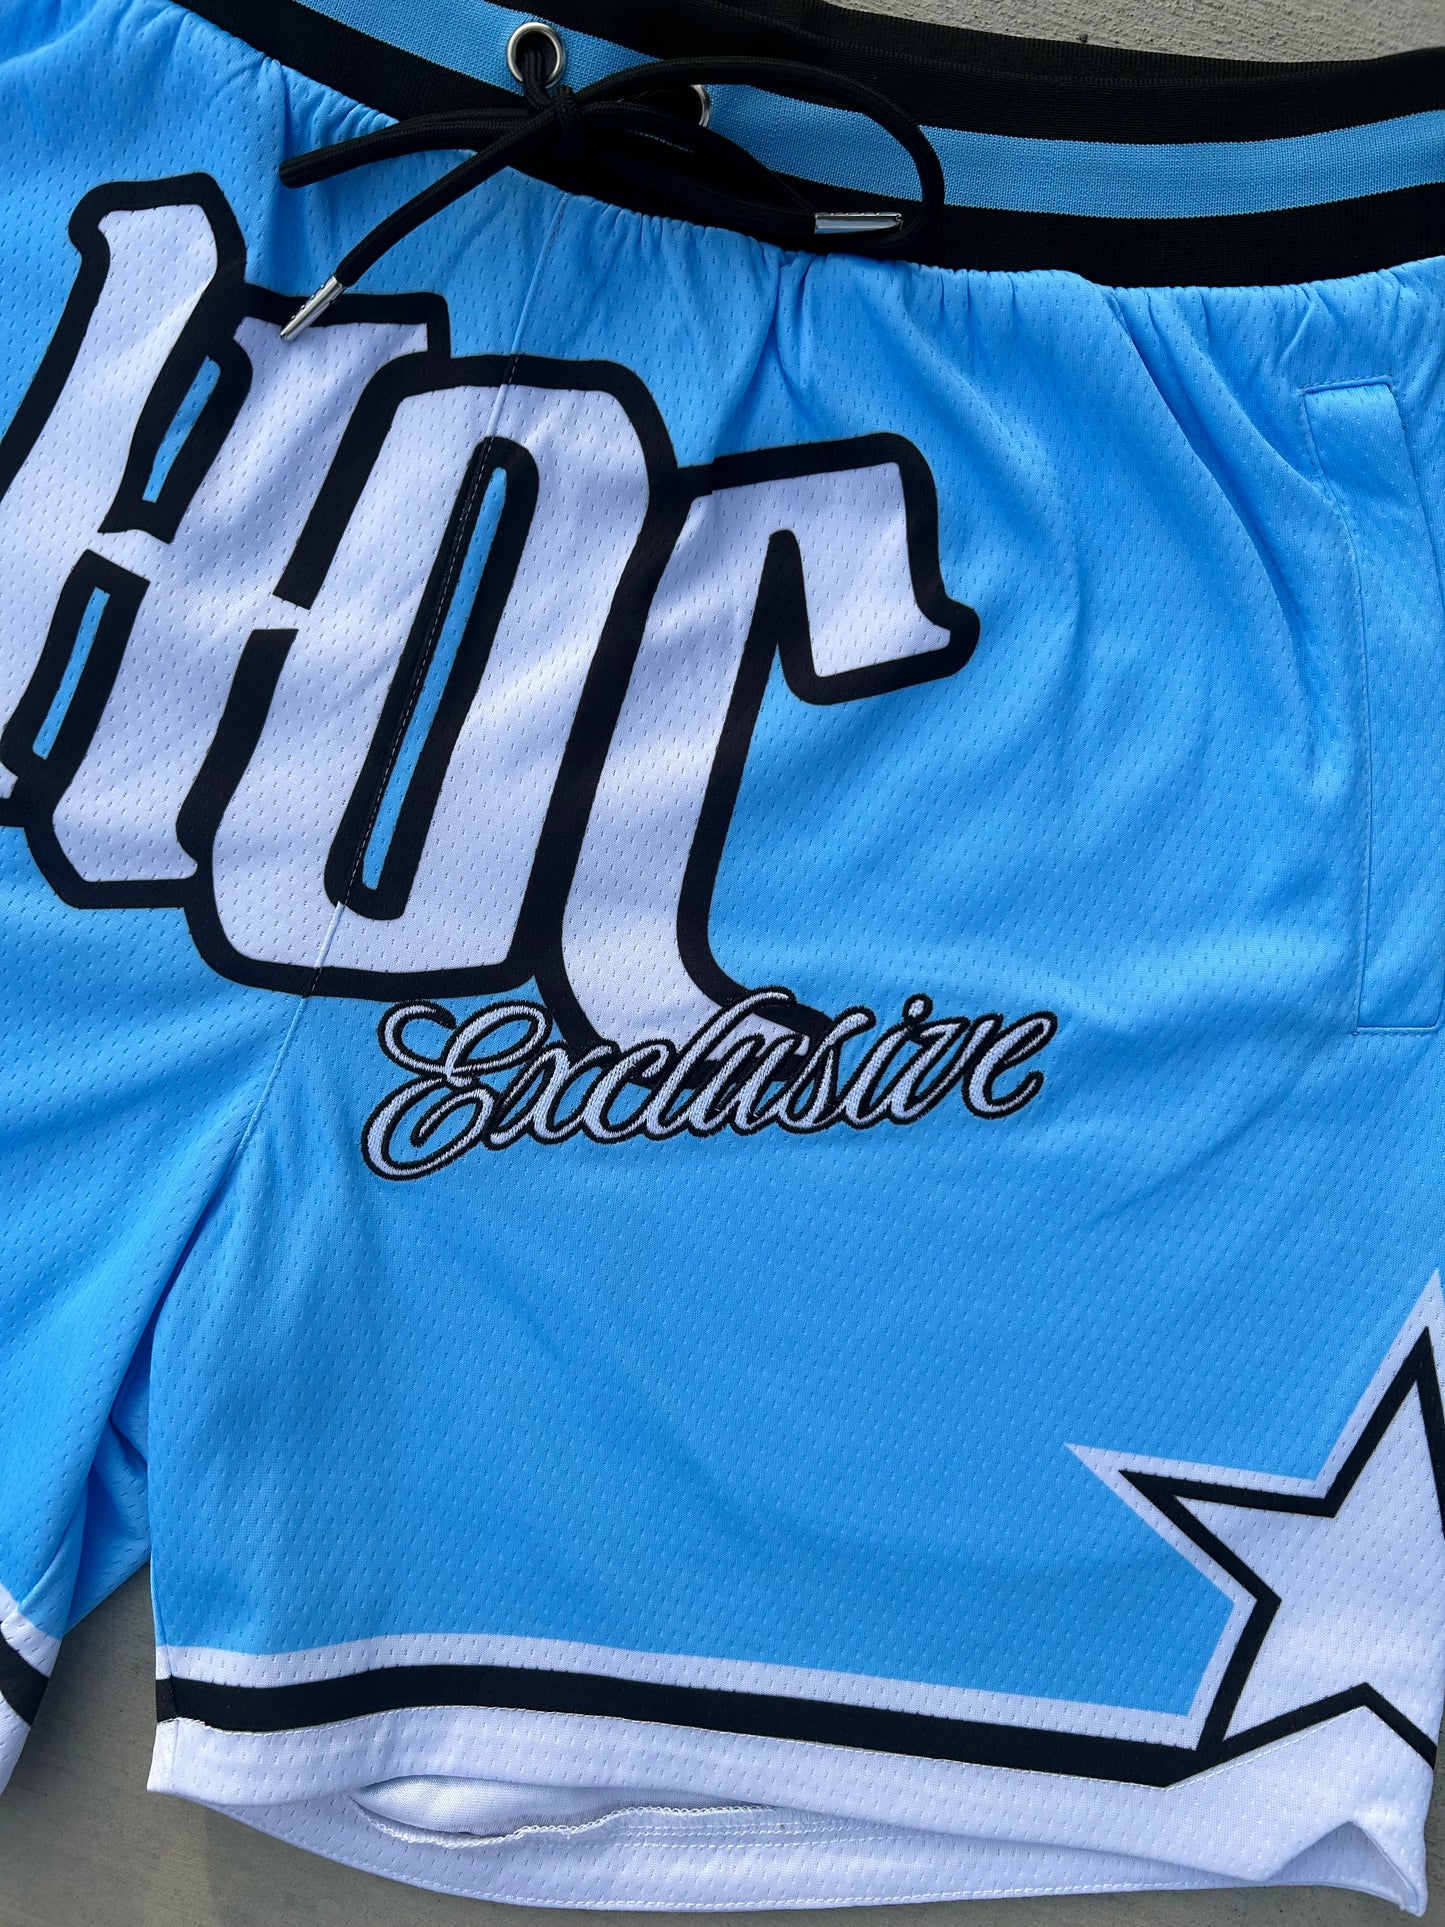 HOC GARMENTS Exclusive "Blue" Shorts